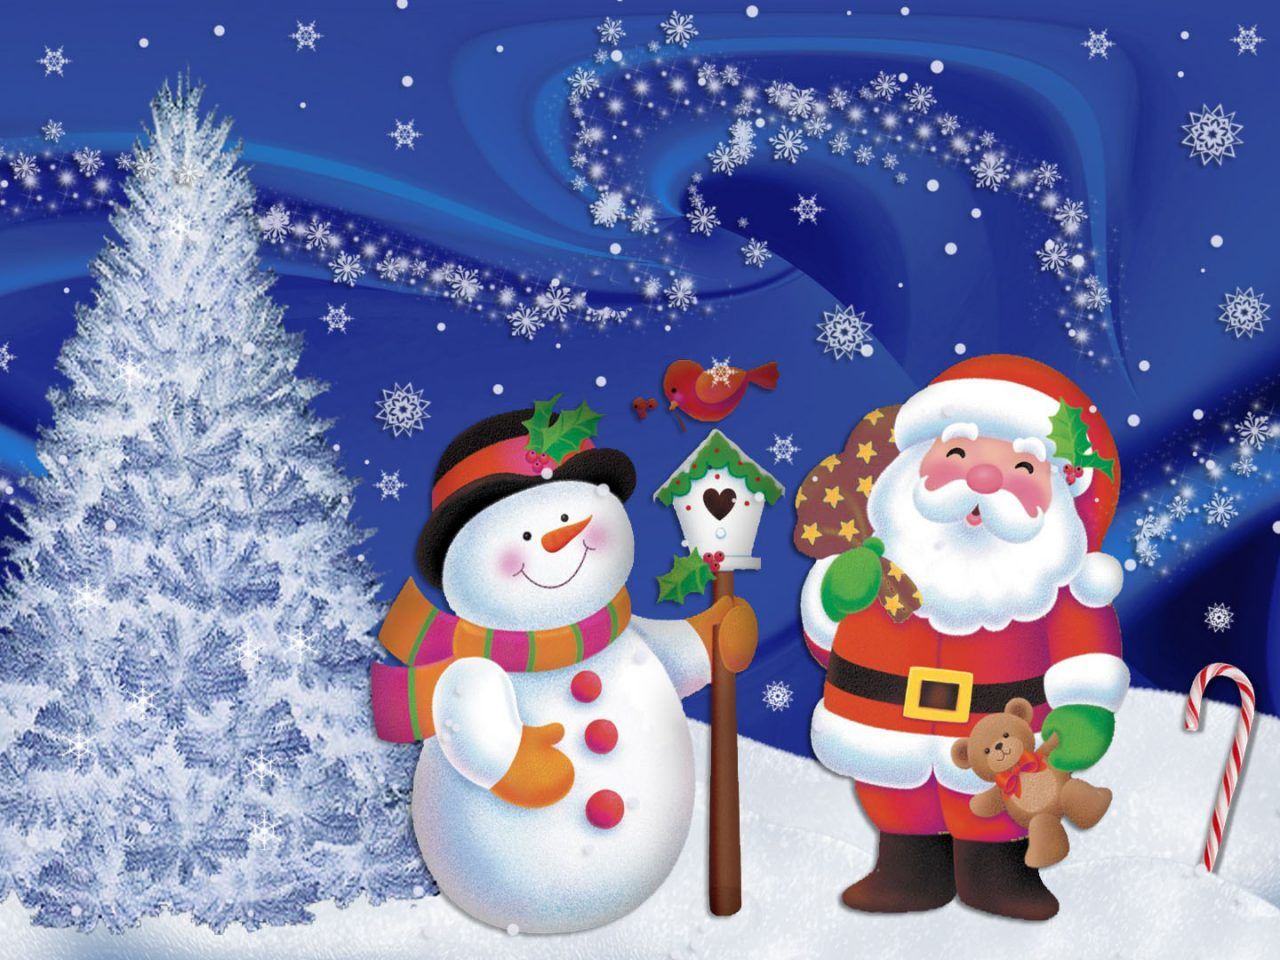 Santa Claus Winter Snow Snowman Desktop Holiday Christmas Wallpapers Hd 1920x1080 : Wallpapers13